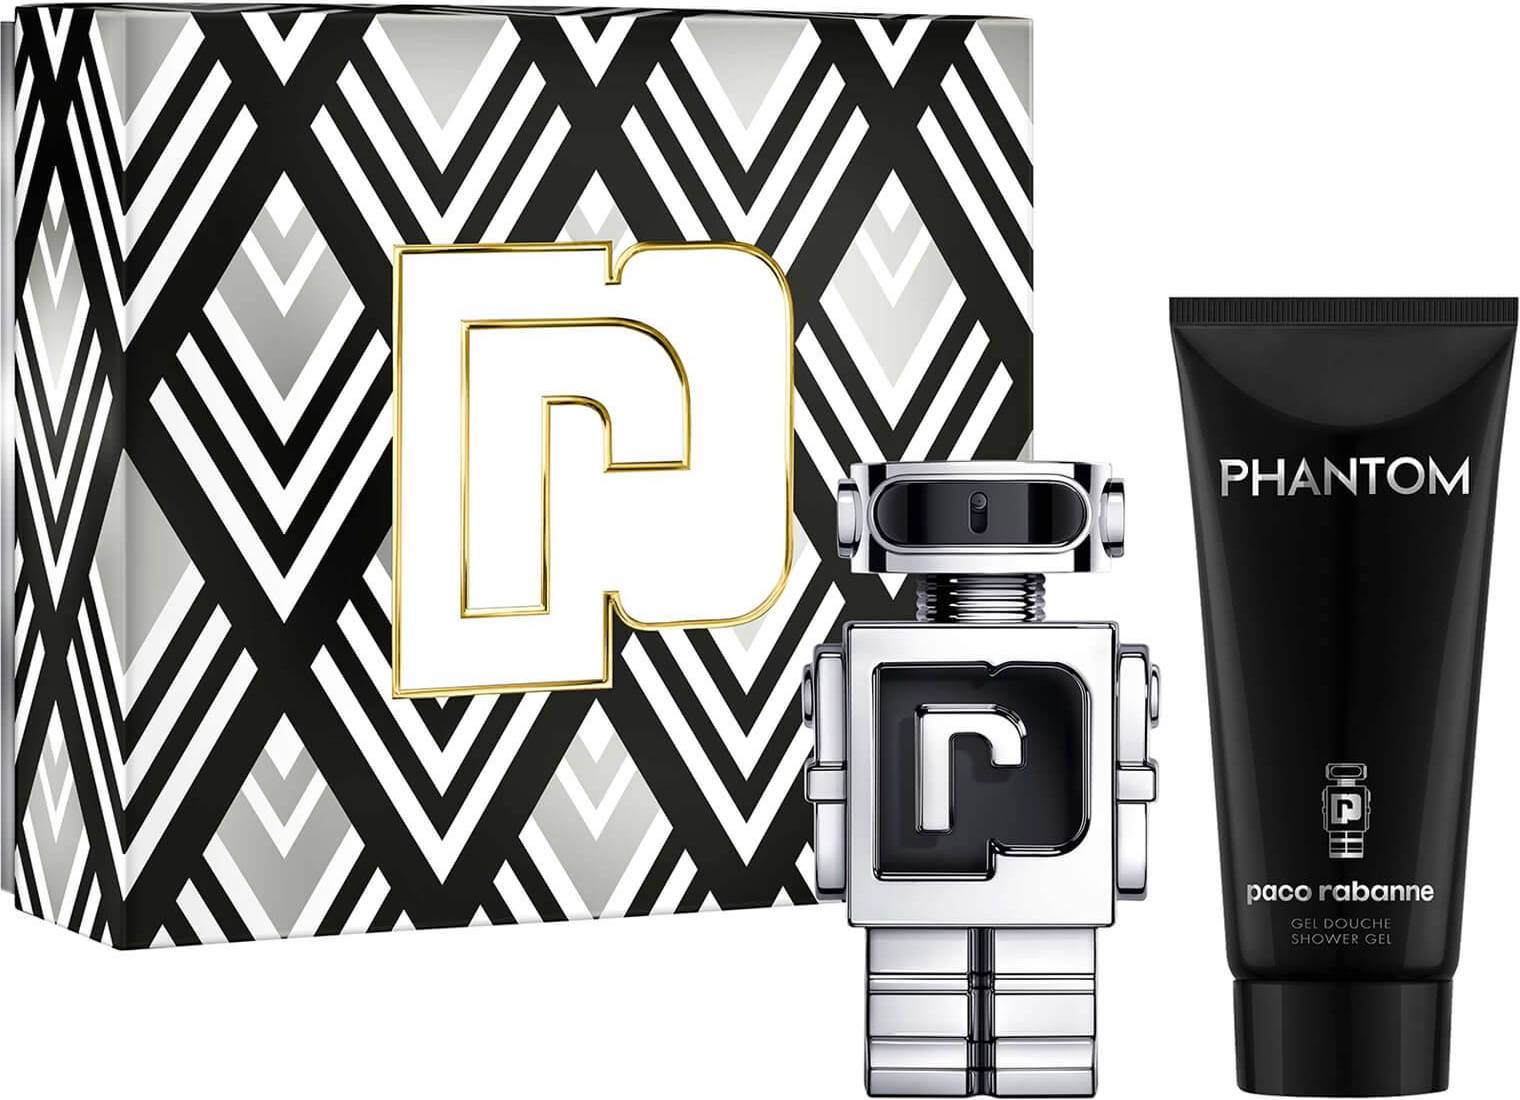 Paco rabanne phantom gift set Fragrances Paco Rabanne Phantom Gift Set EdT 50ml + Shower Gel 100ml